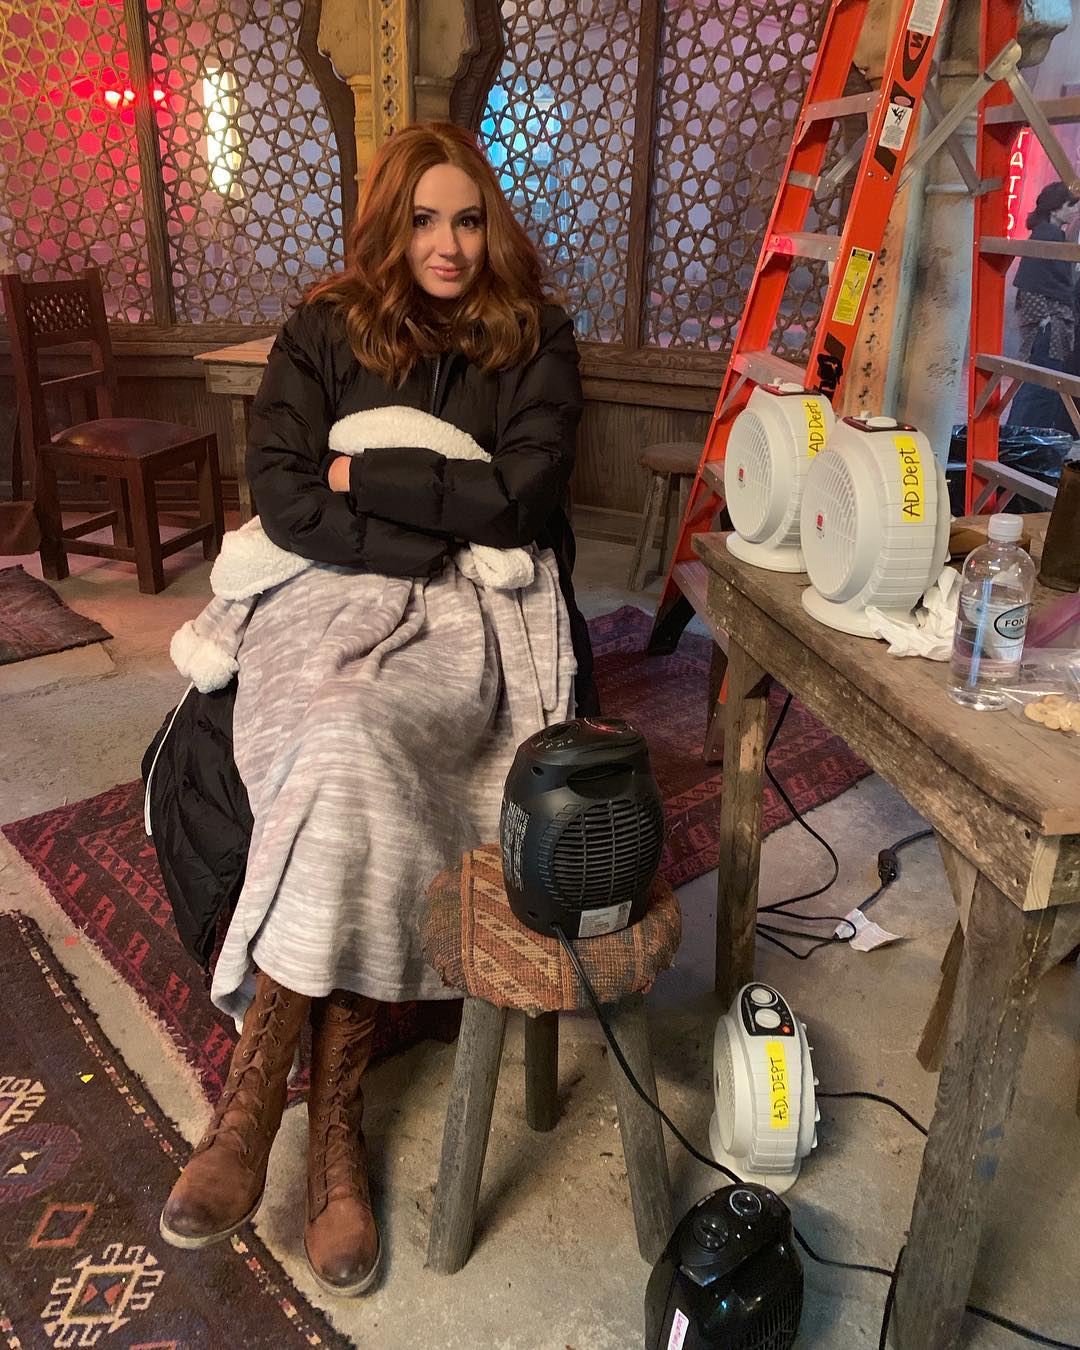 Karen Gillan had a hard time keeping warm in her costume on the set of Jumanji.